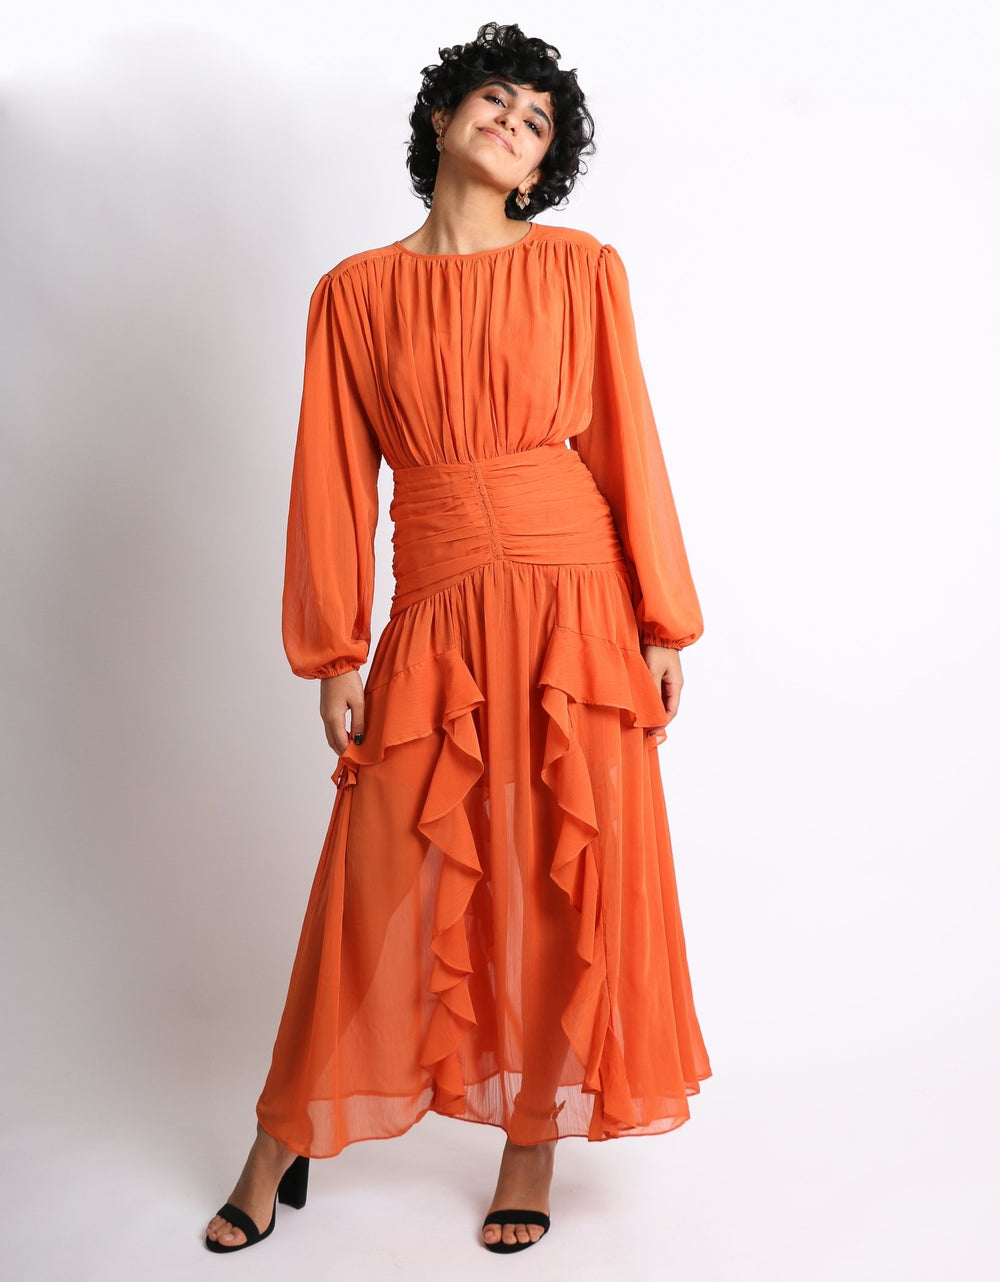 Flavia - naranja - Lend the Trend renta de vestidos mexico